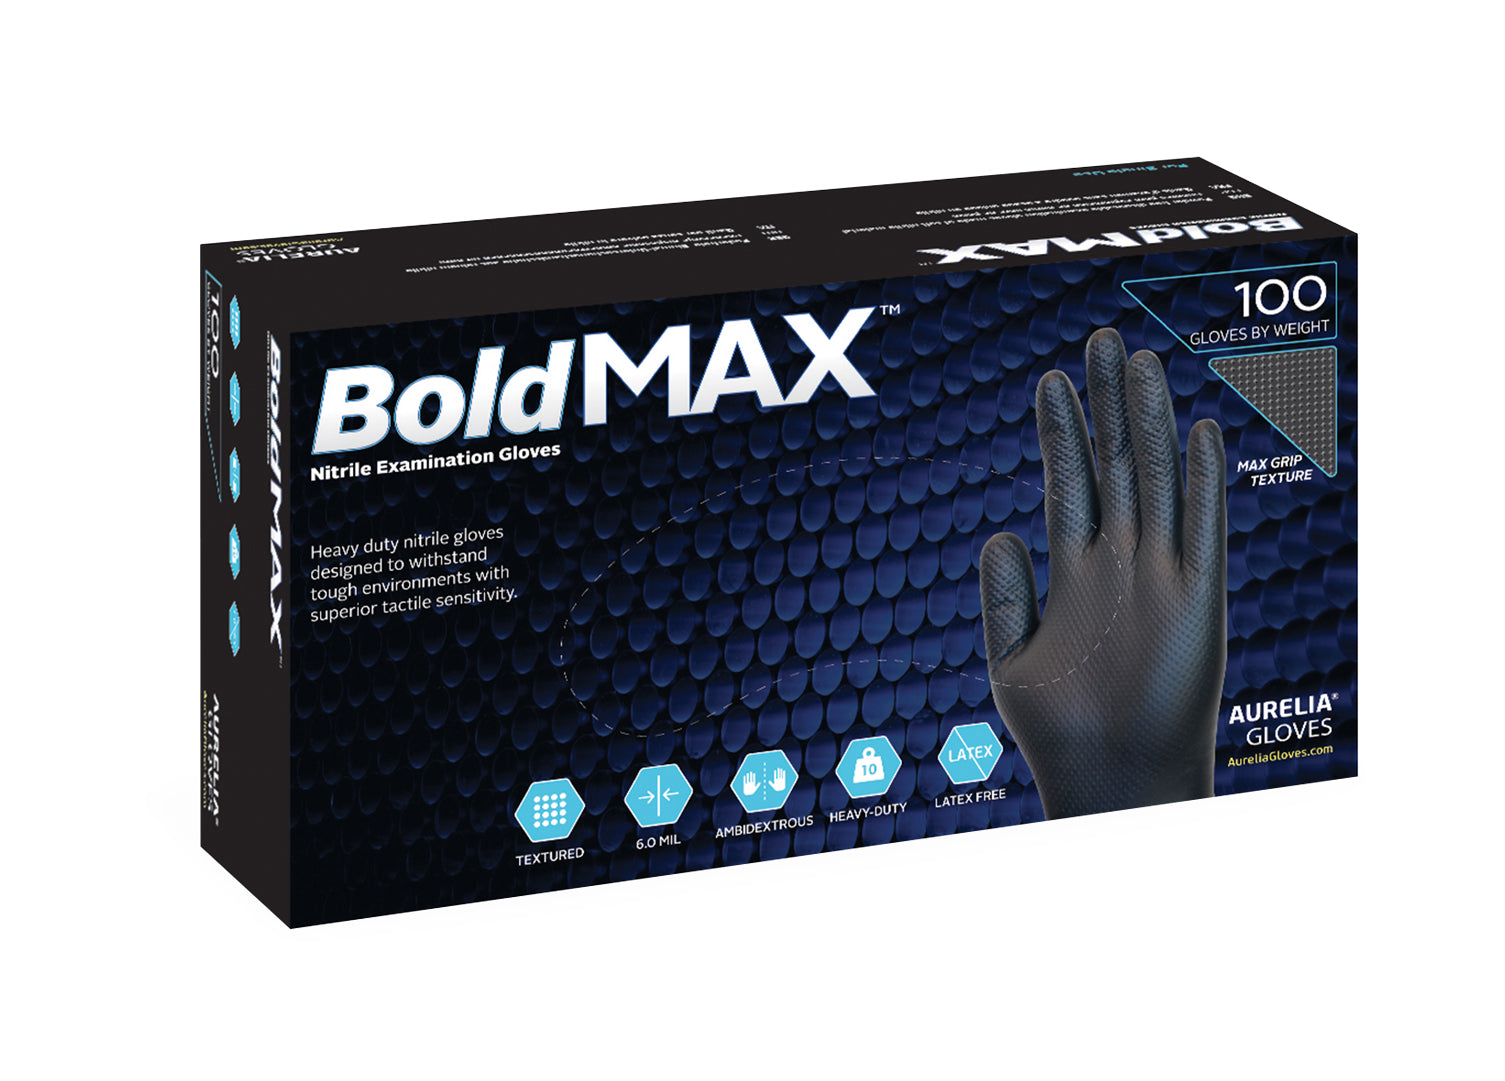 Aurelia Nitrile Exam Grade Latex Free Gloves - Boldmax